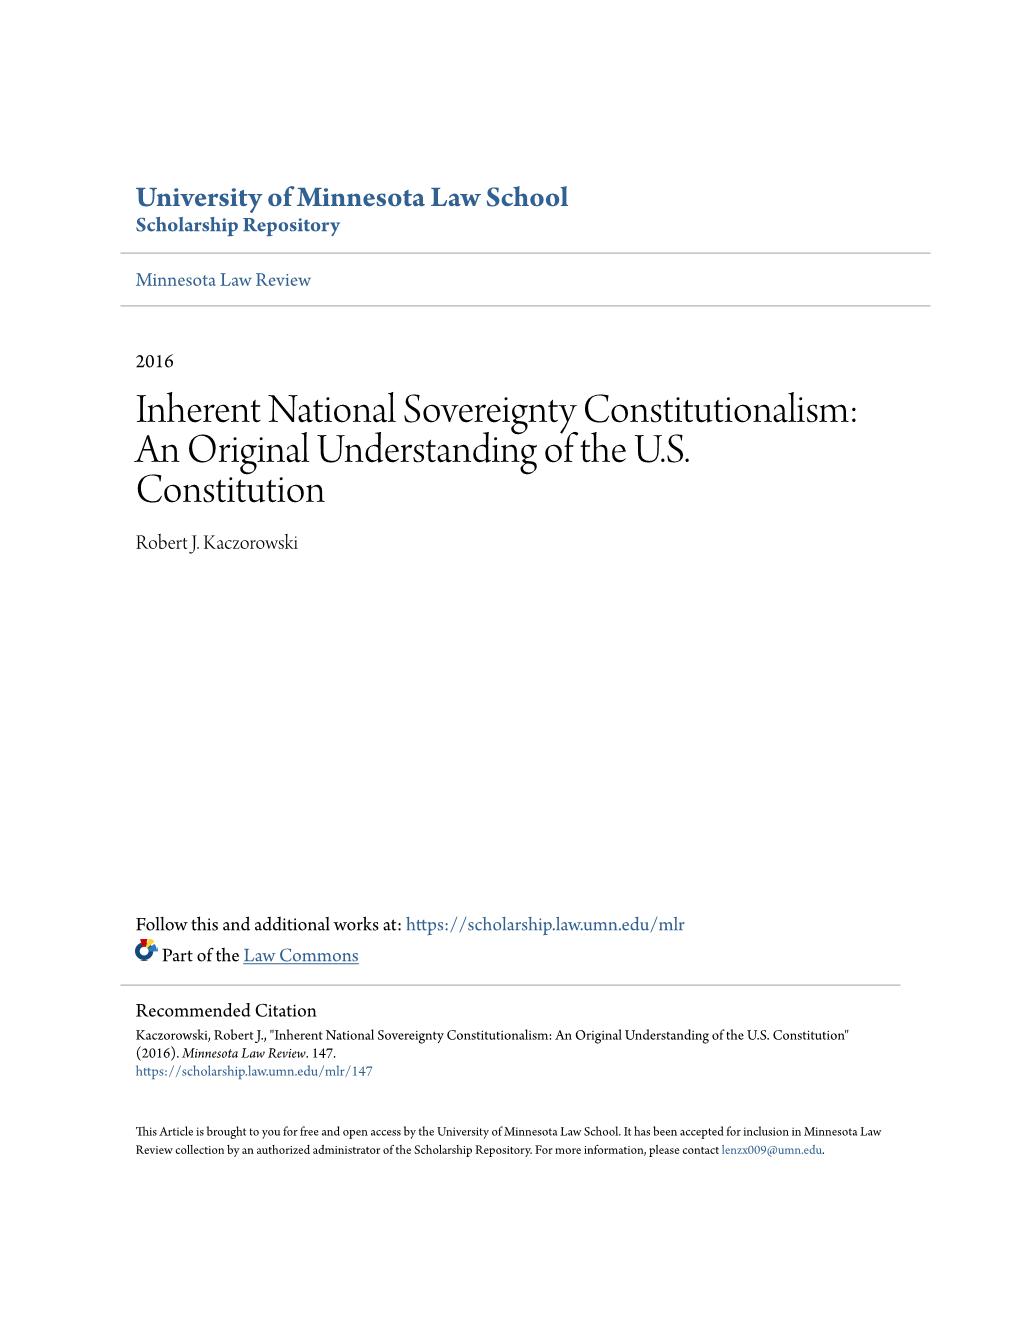 Inherent National Sovereignty Constitutionalism: an Original Understanding of the U.S